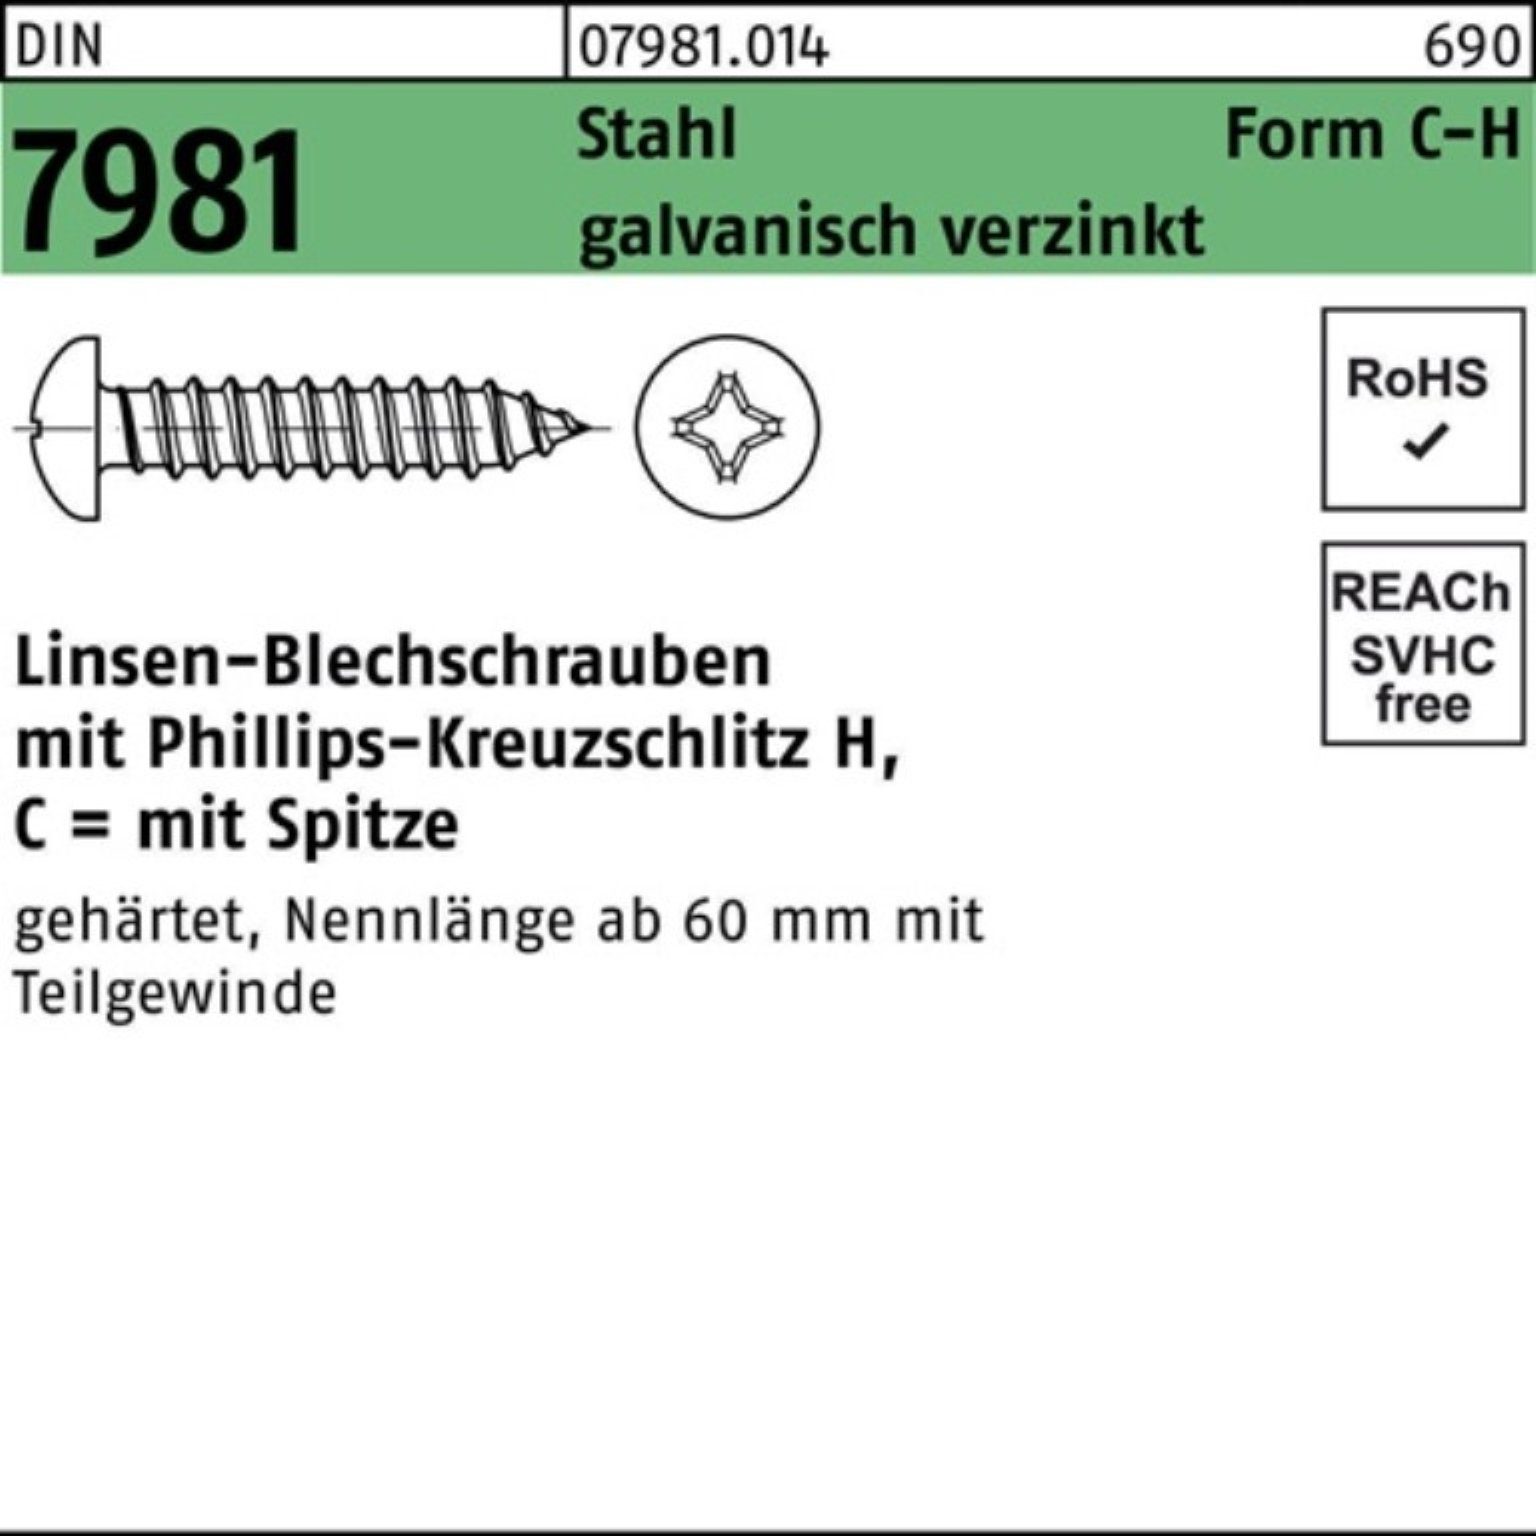 S Reyher PH C4,8x32-H Blechschraube Blechschraube galv.verz. 7981 100er Stahl LIKO DIN Pack